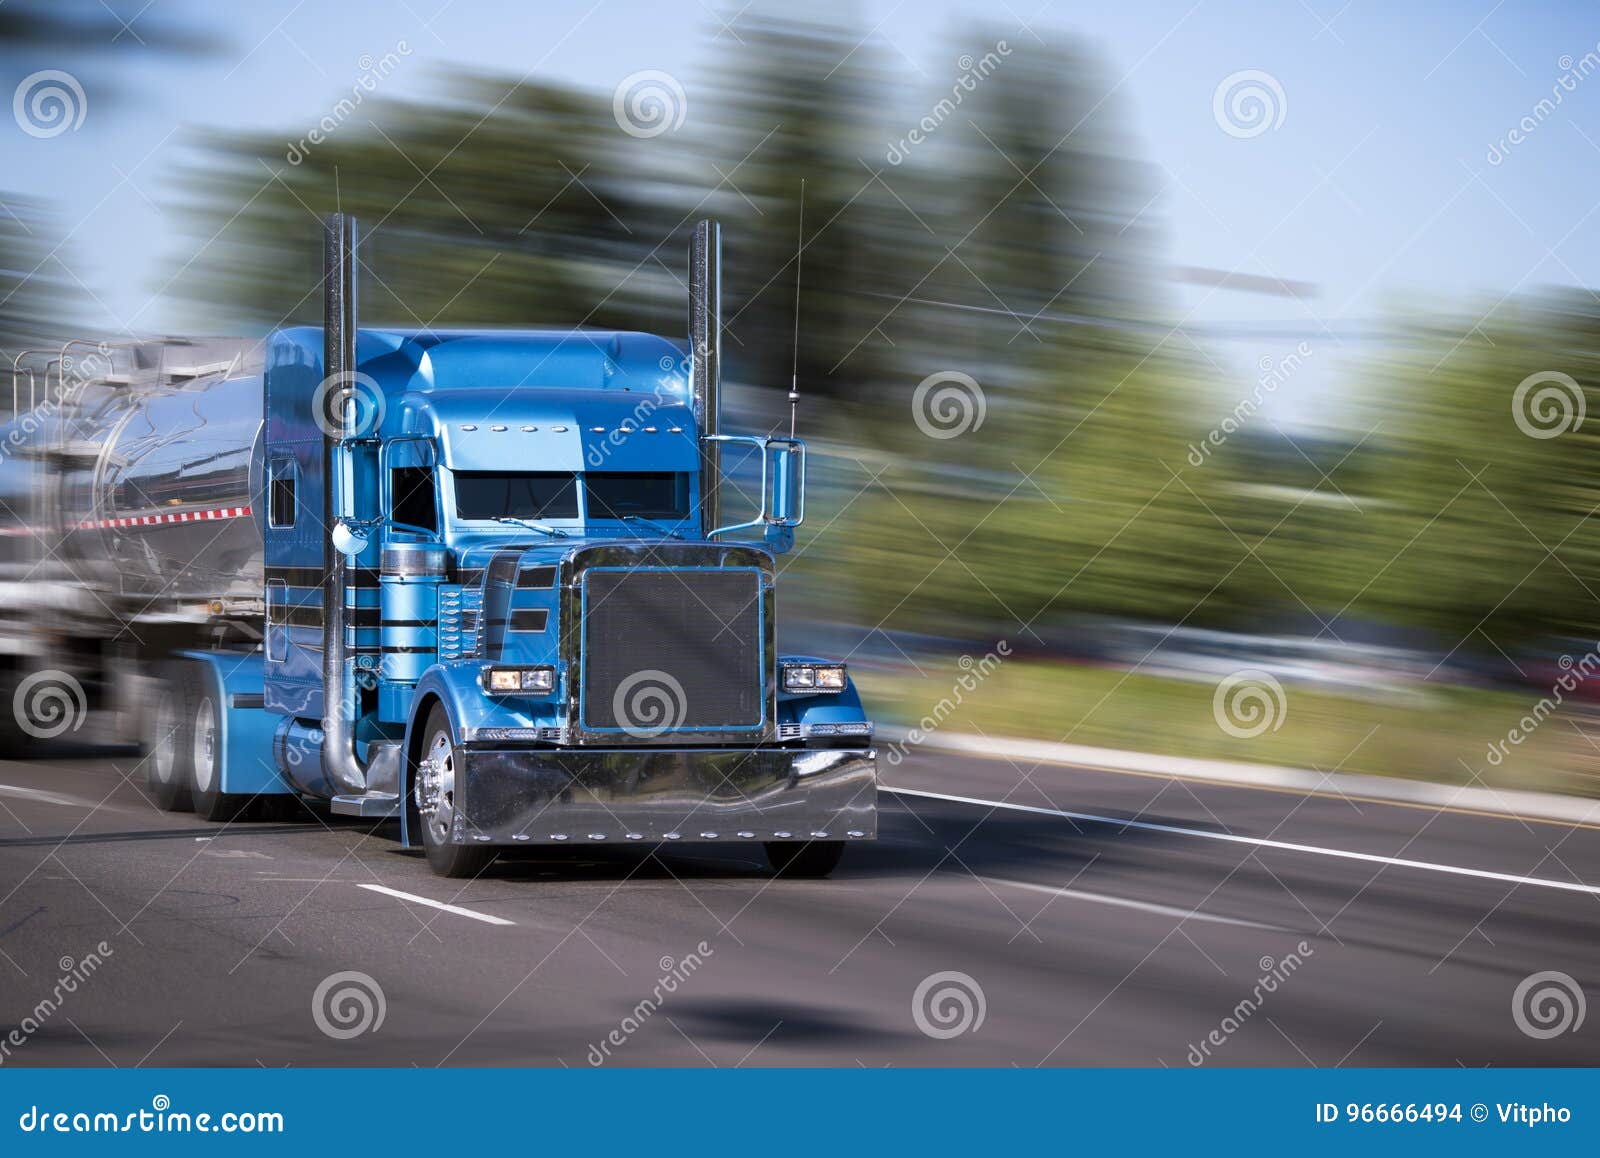 impressive customized blue big rig semi truck with tank trailers